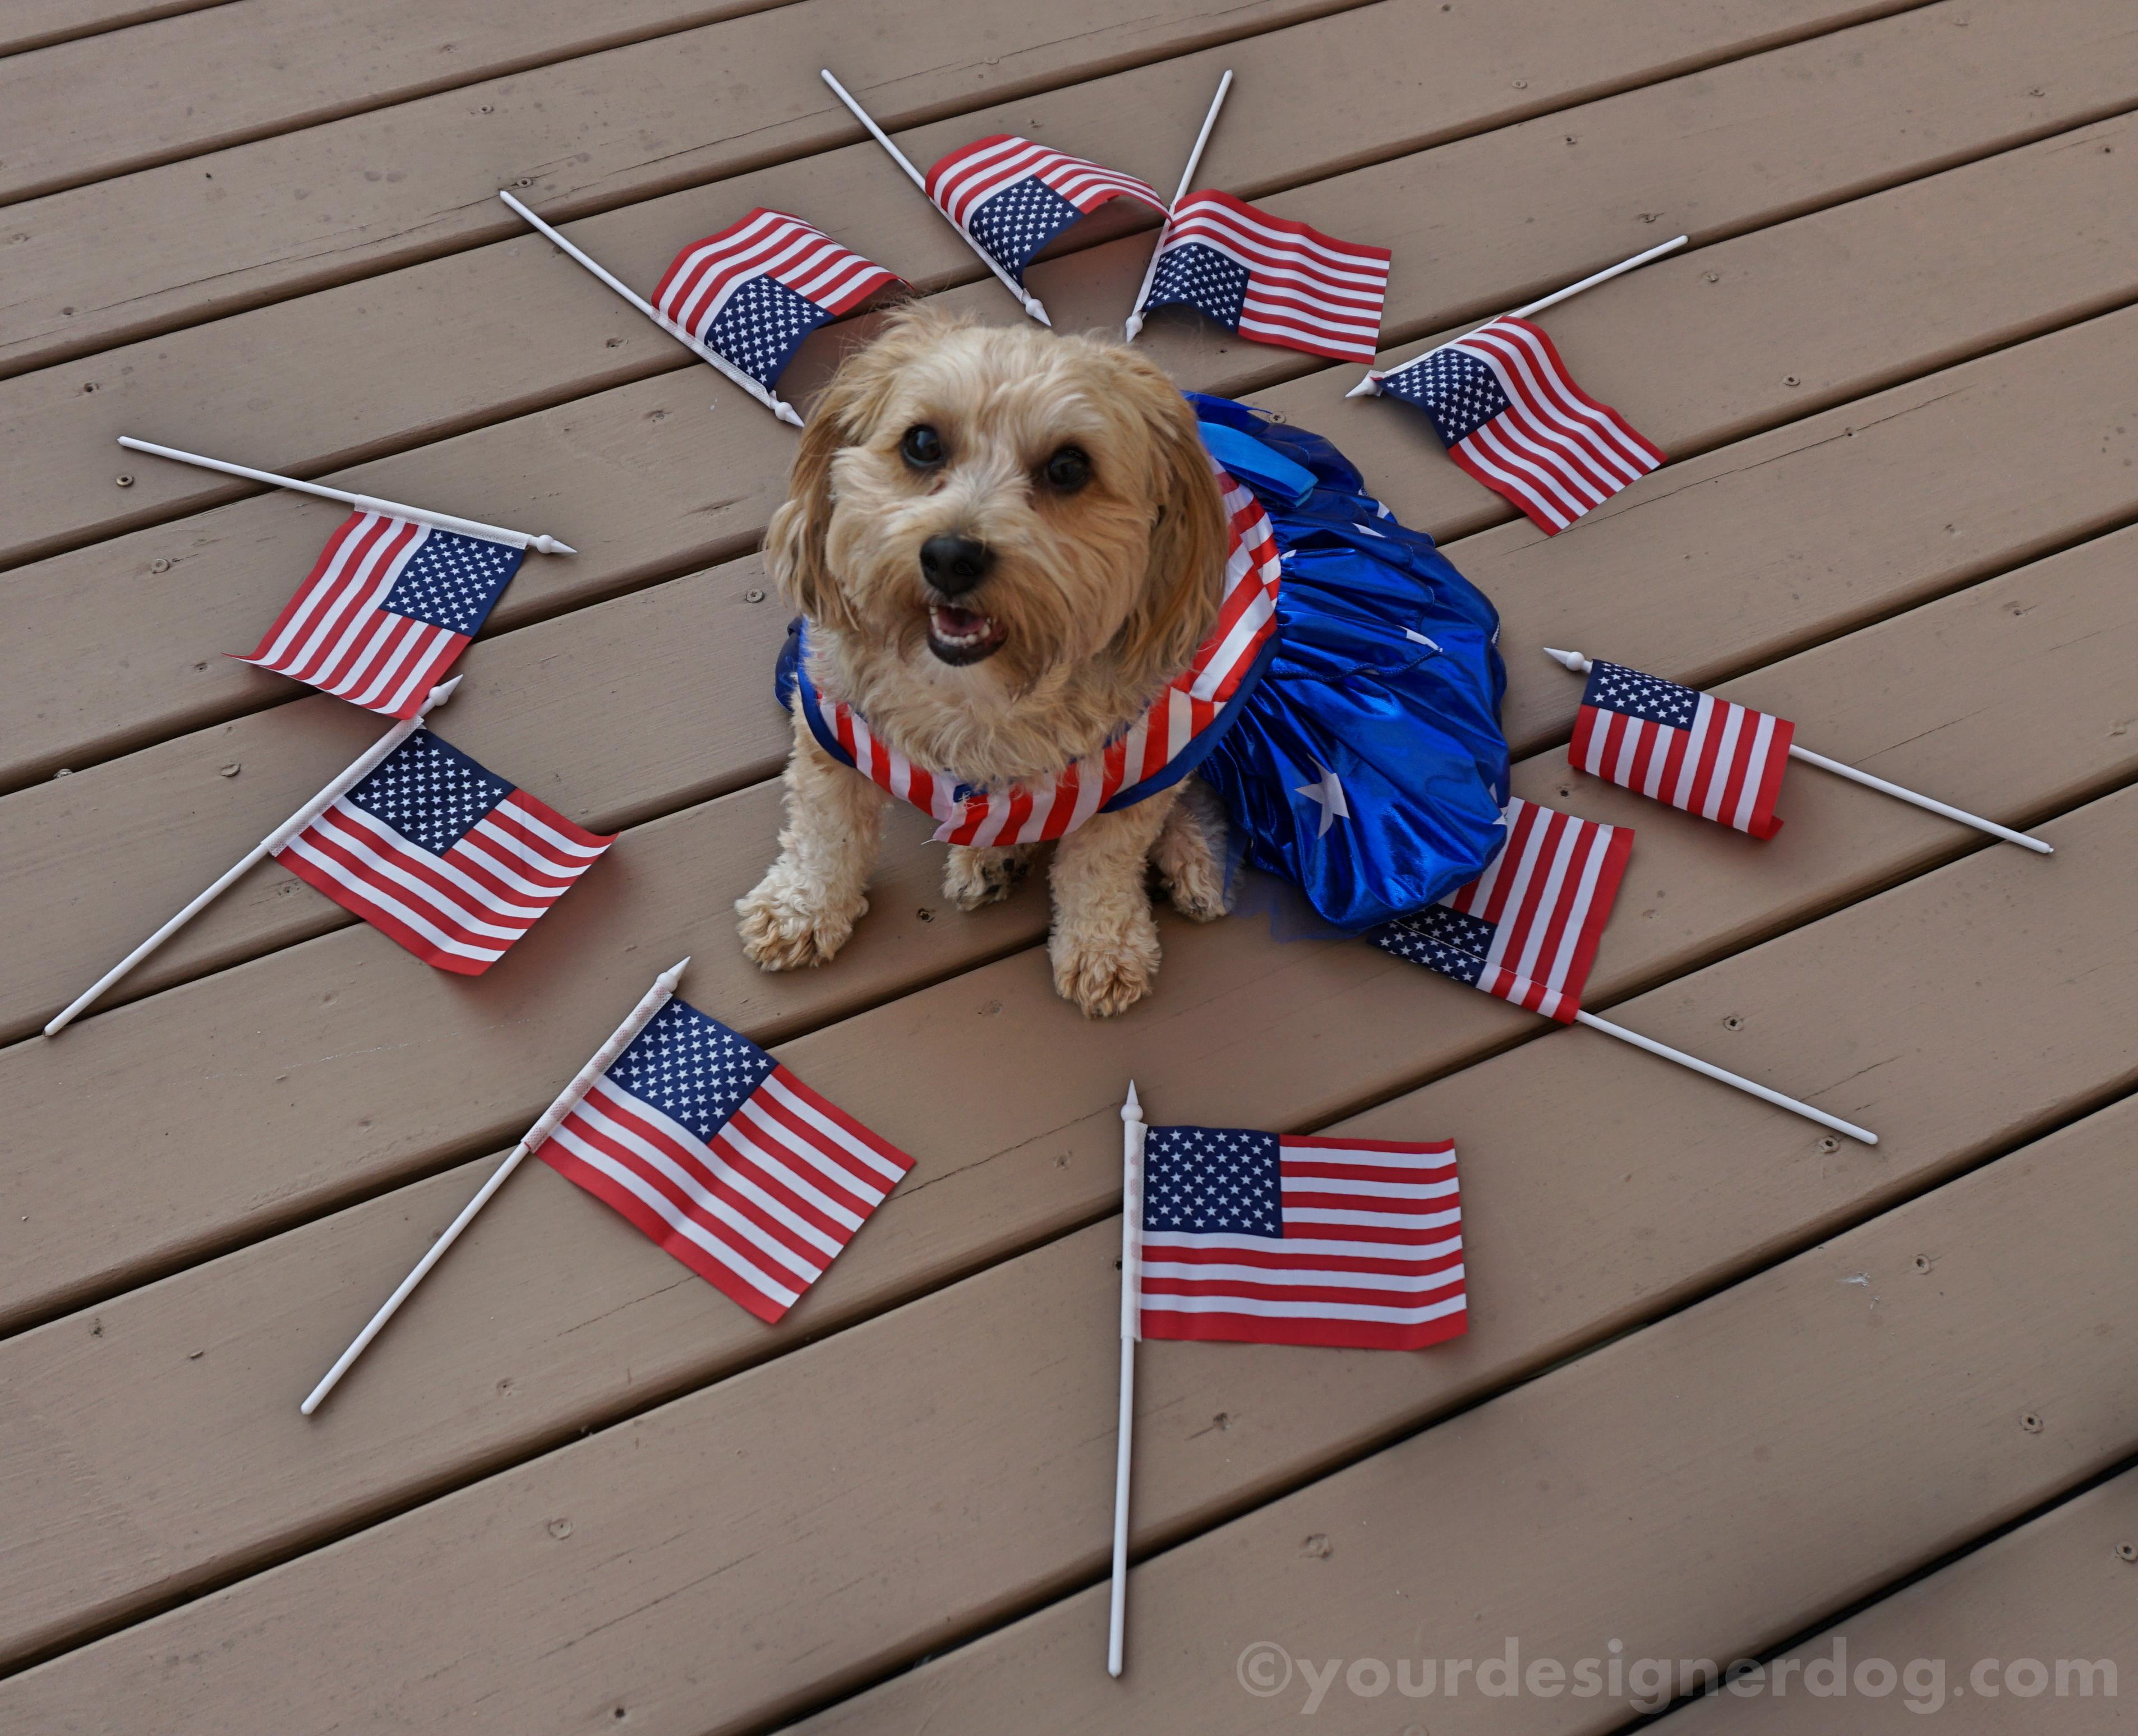 dogs, designer dogs, yorkipoo, yorkie poo, flag, patriotic, american, dog smiling